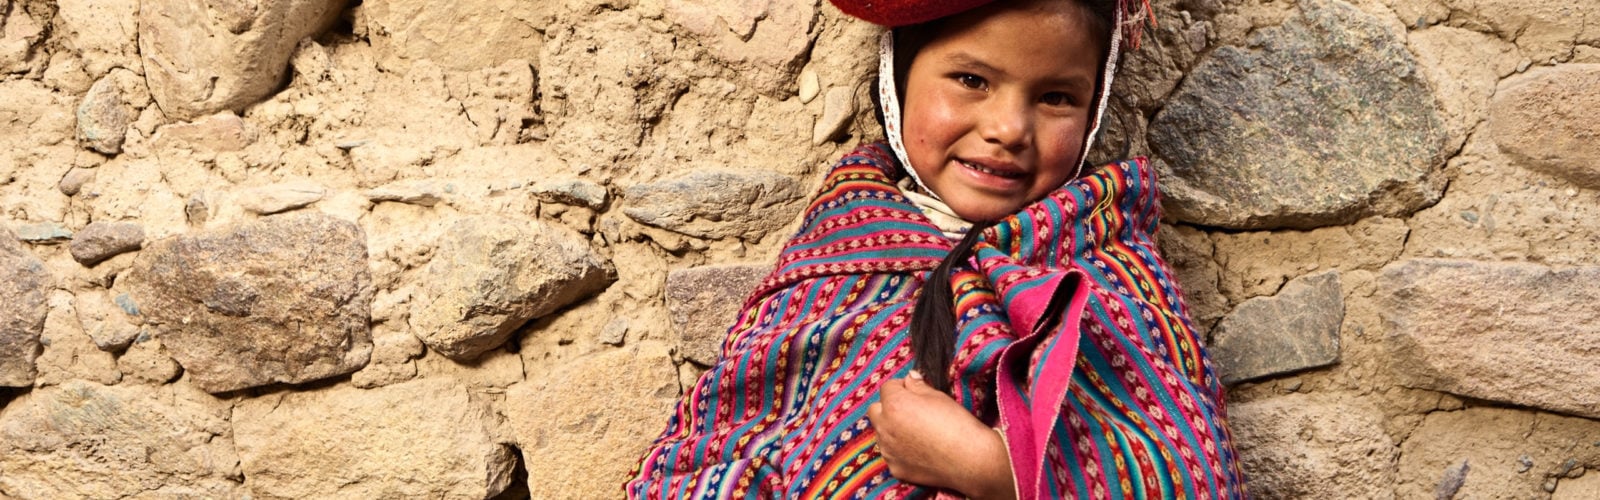 peruvian-girl-in-national-dress